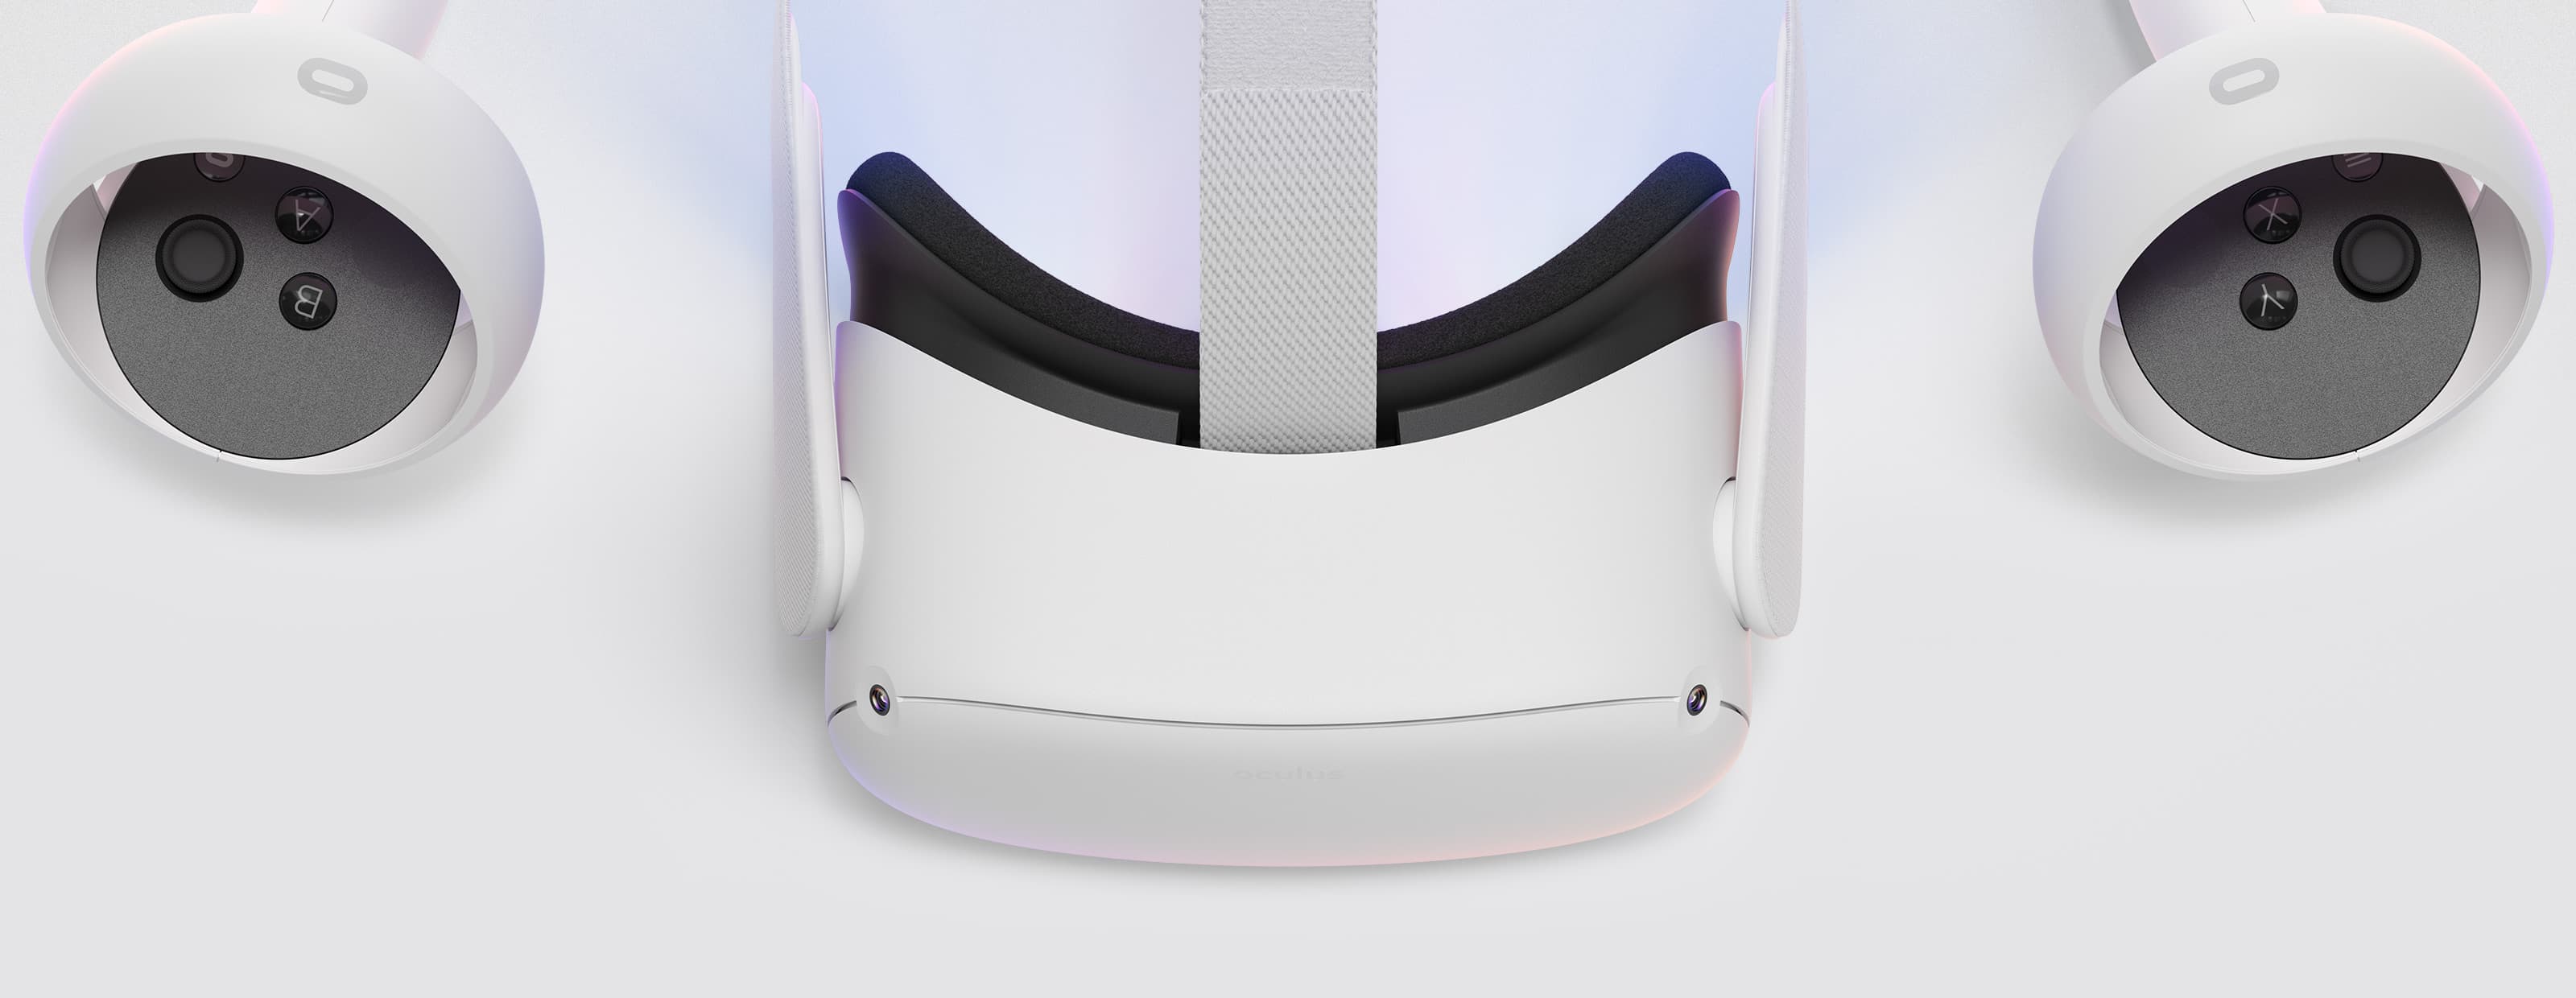 Oculus Quest 2 — первое VR-устройство на базе Qualcomm Snapdragon XR2